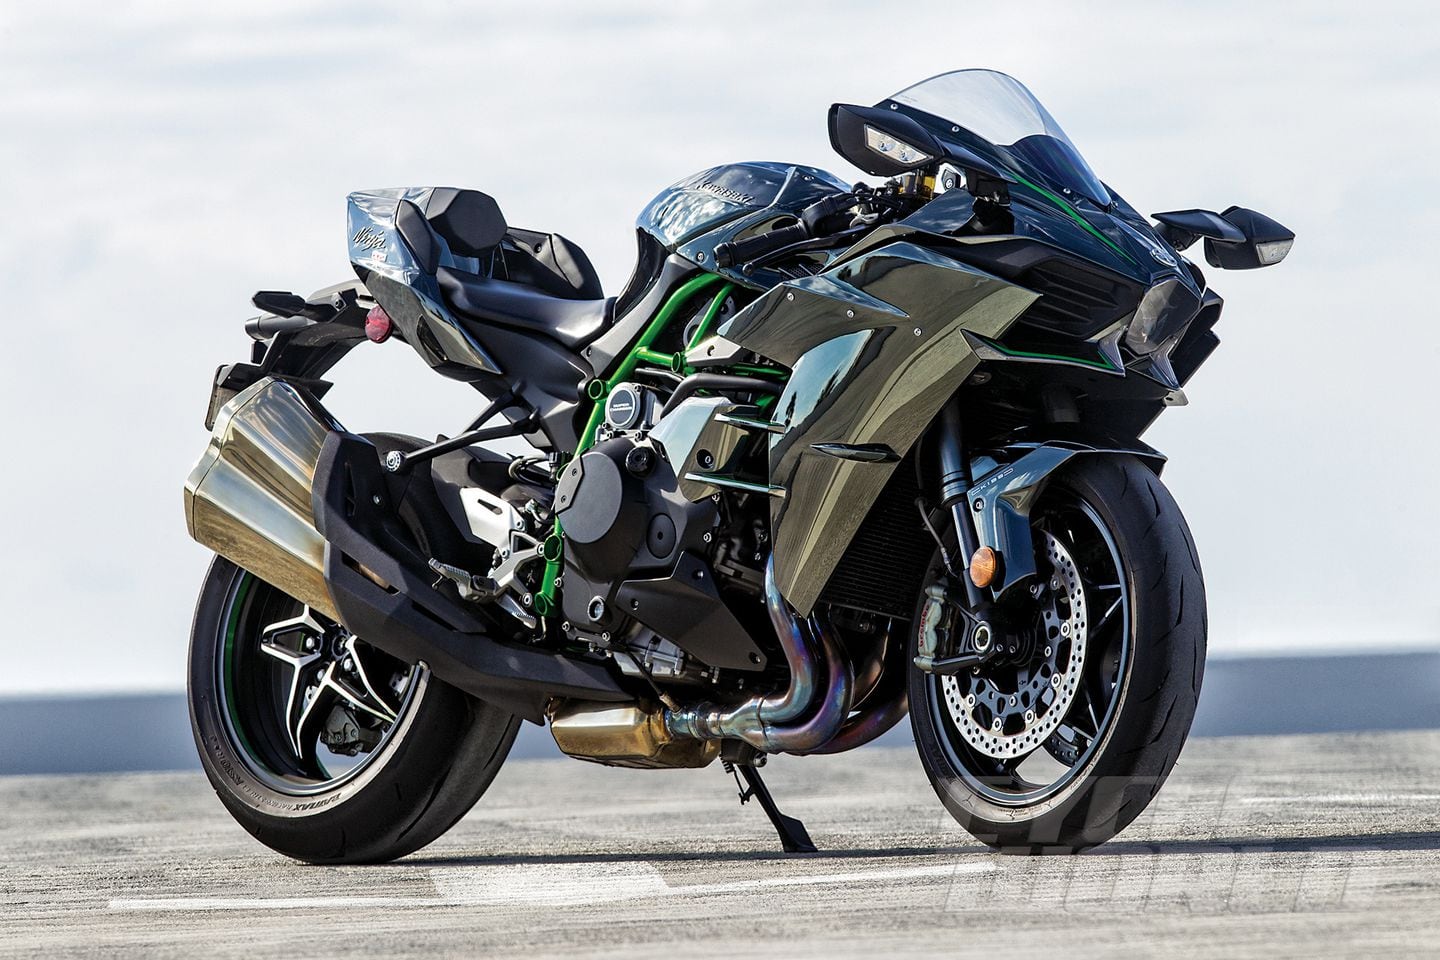 Kawasaki Ninja H2 Superbike ROAD TEST Review, Specs, Photos | Cycle World